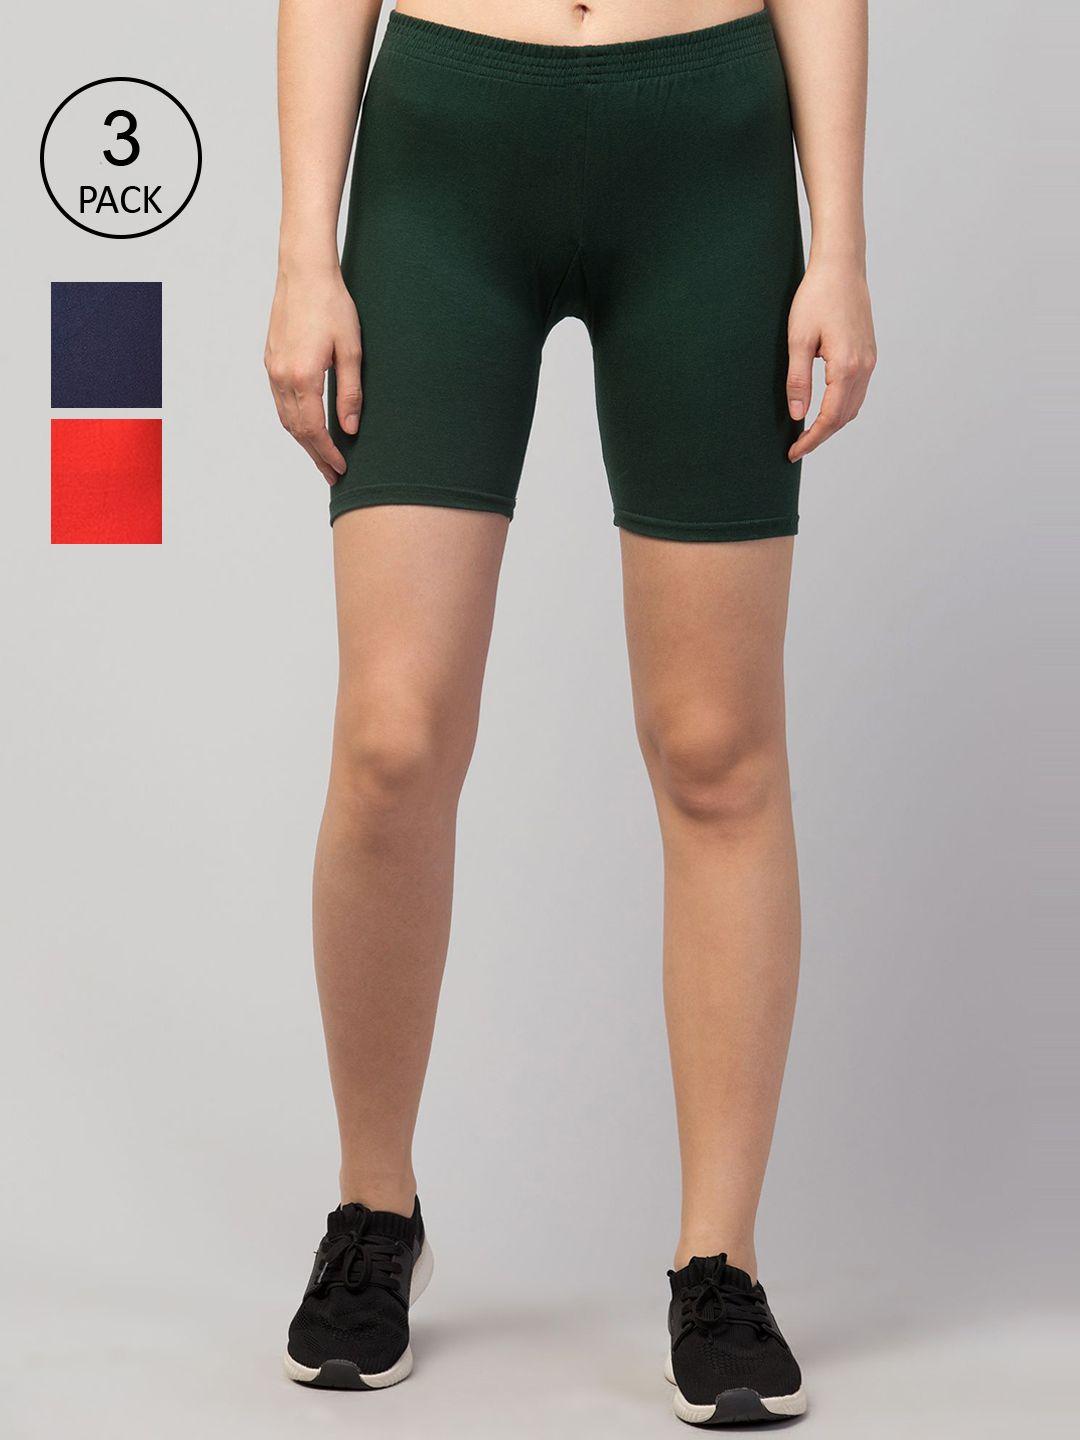 apraa-&-parma-women-set-of-3-green-slim-fit-cycling-sports-shorts